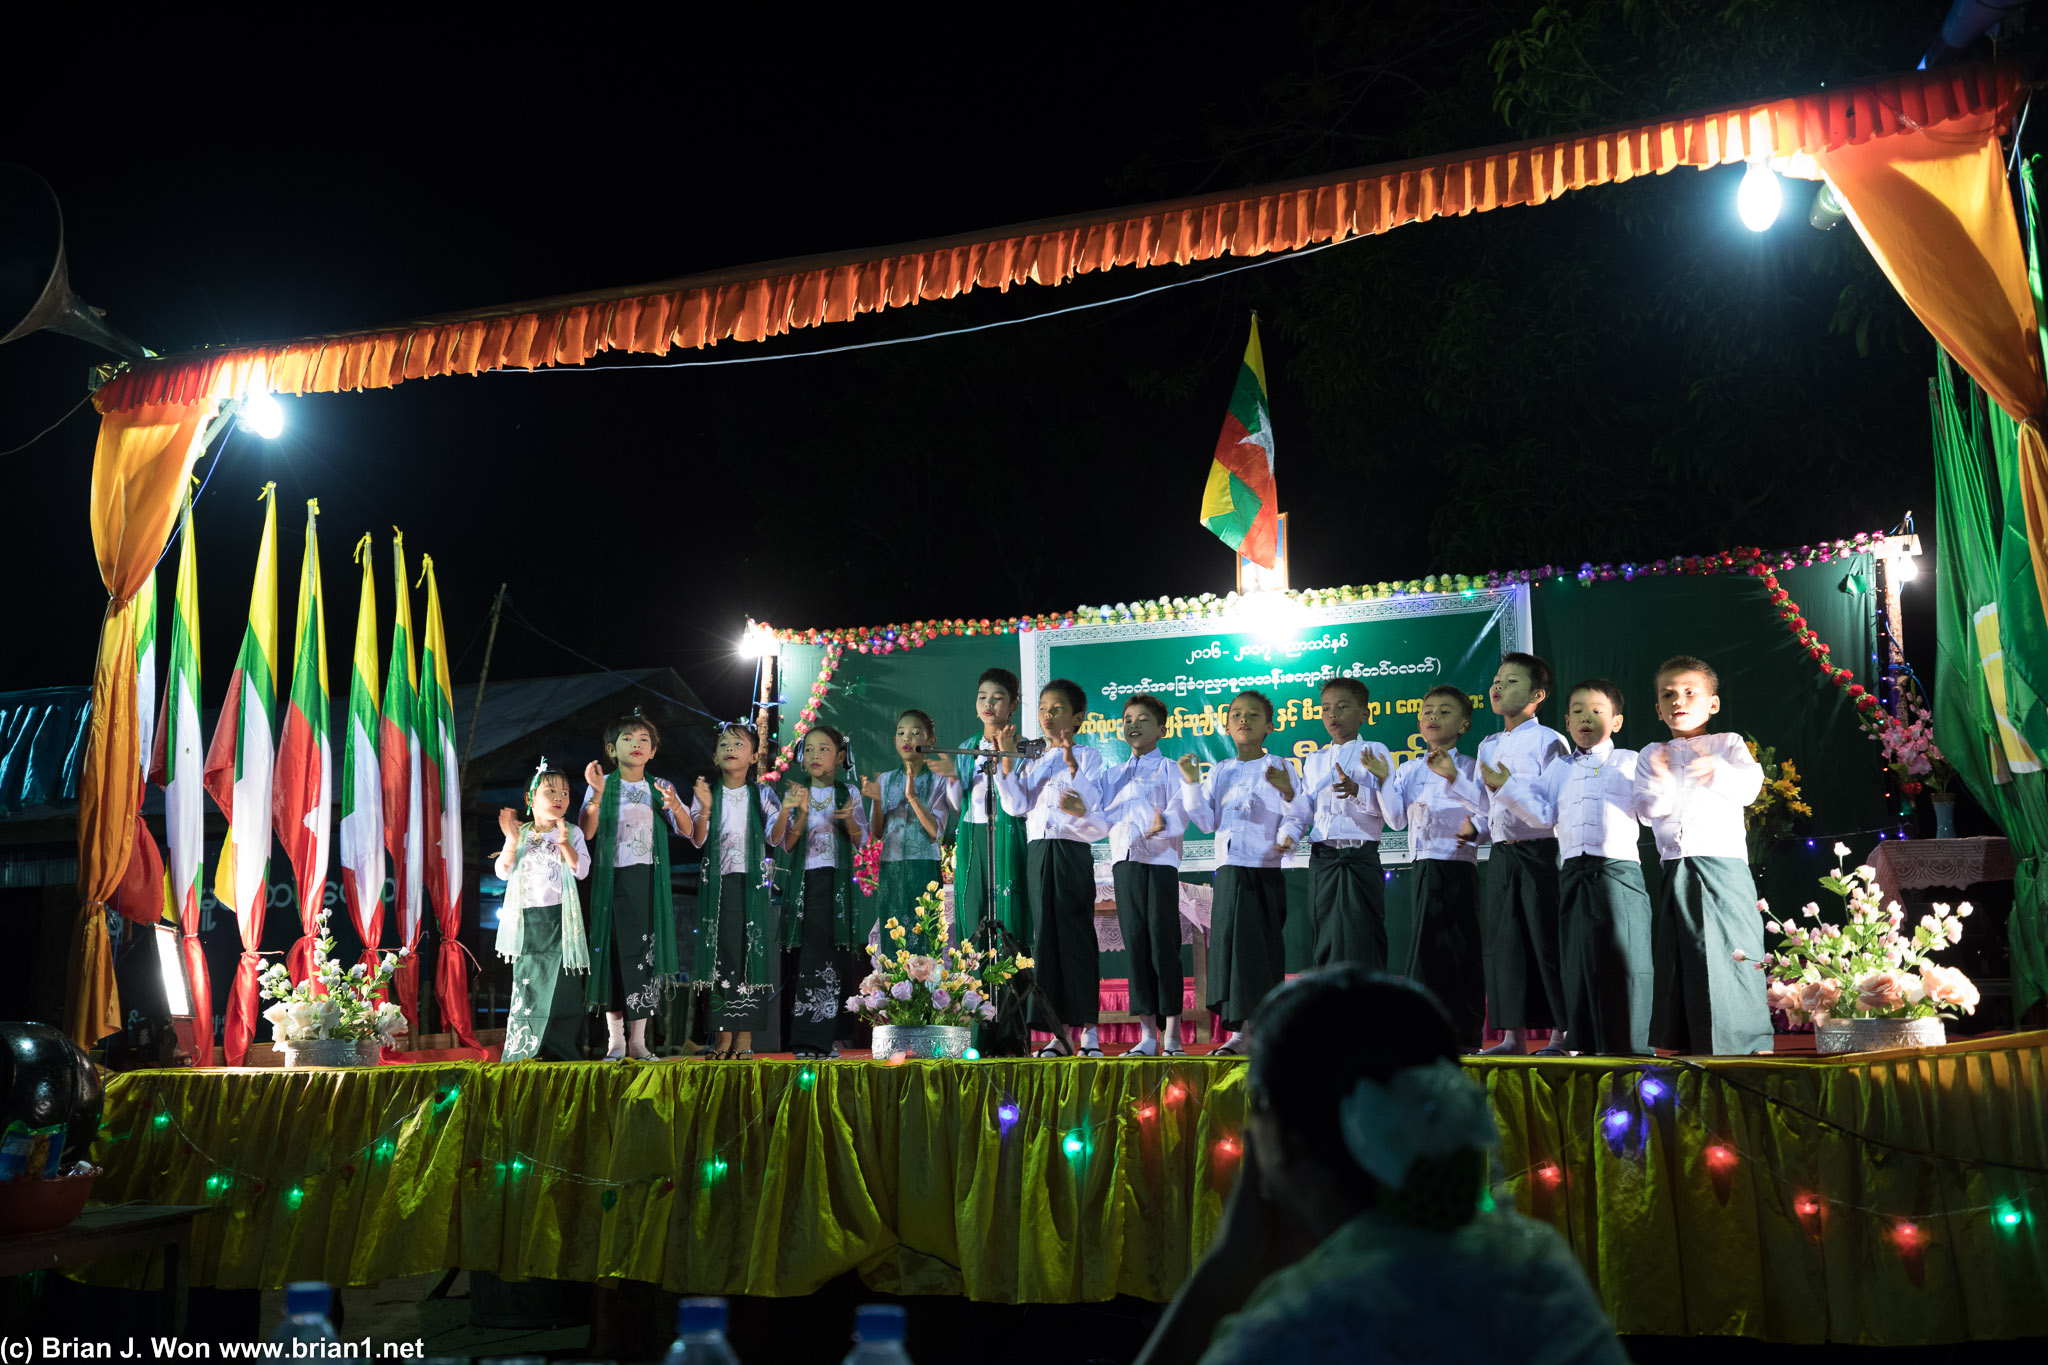 Village ceremony for all the school children.